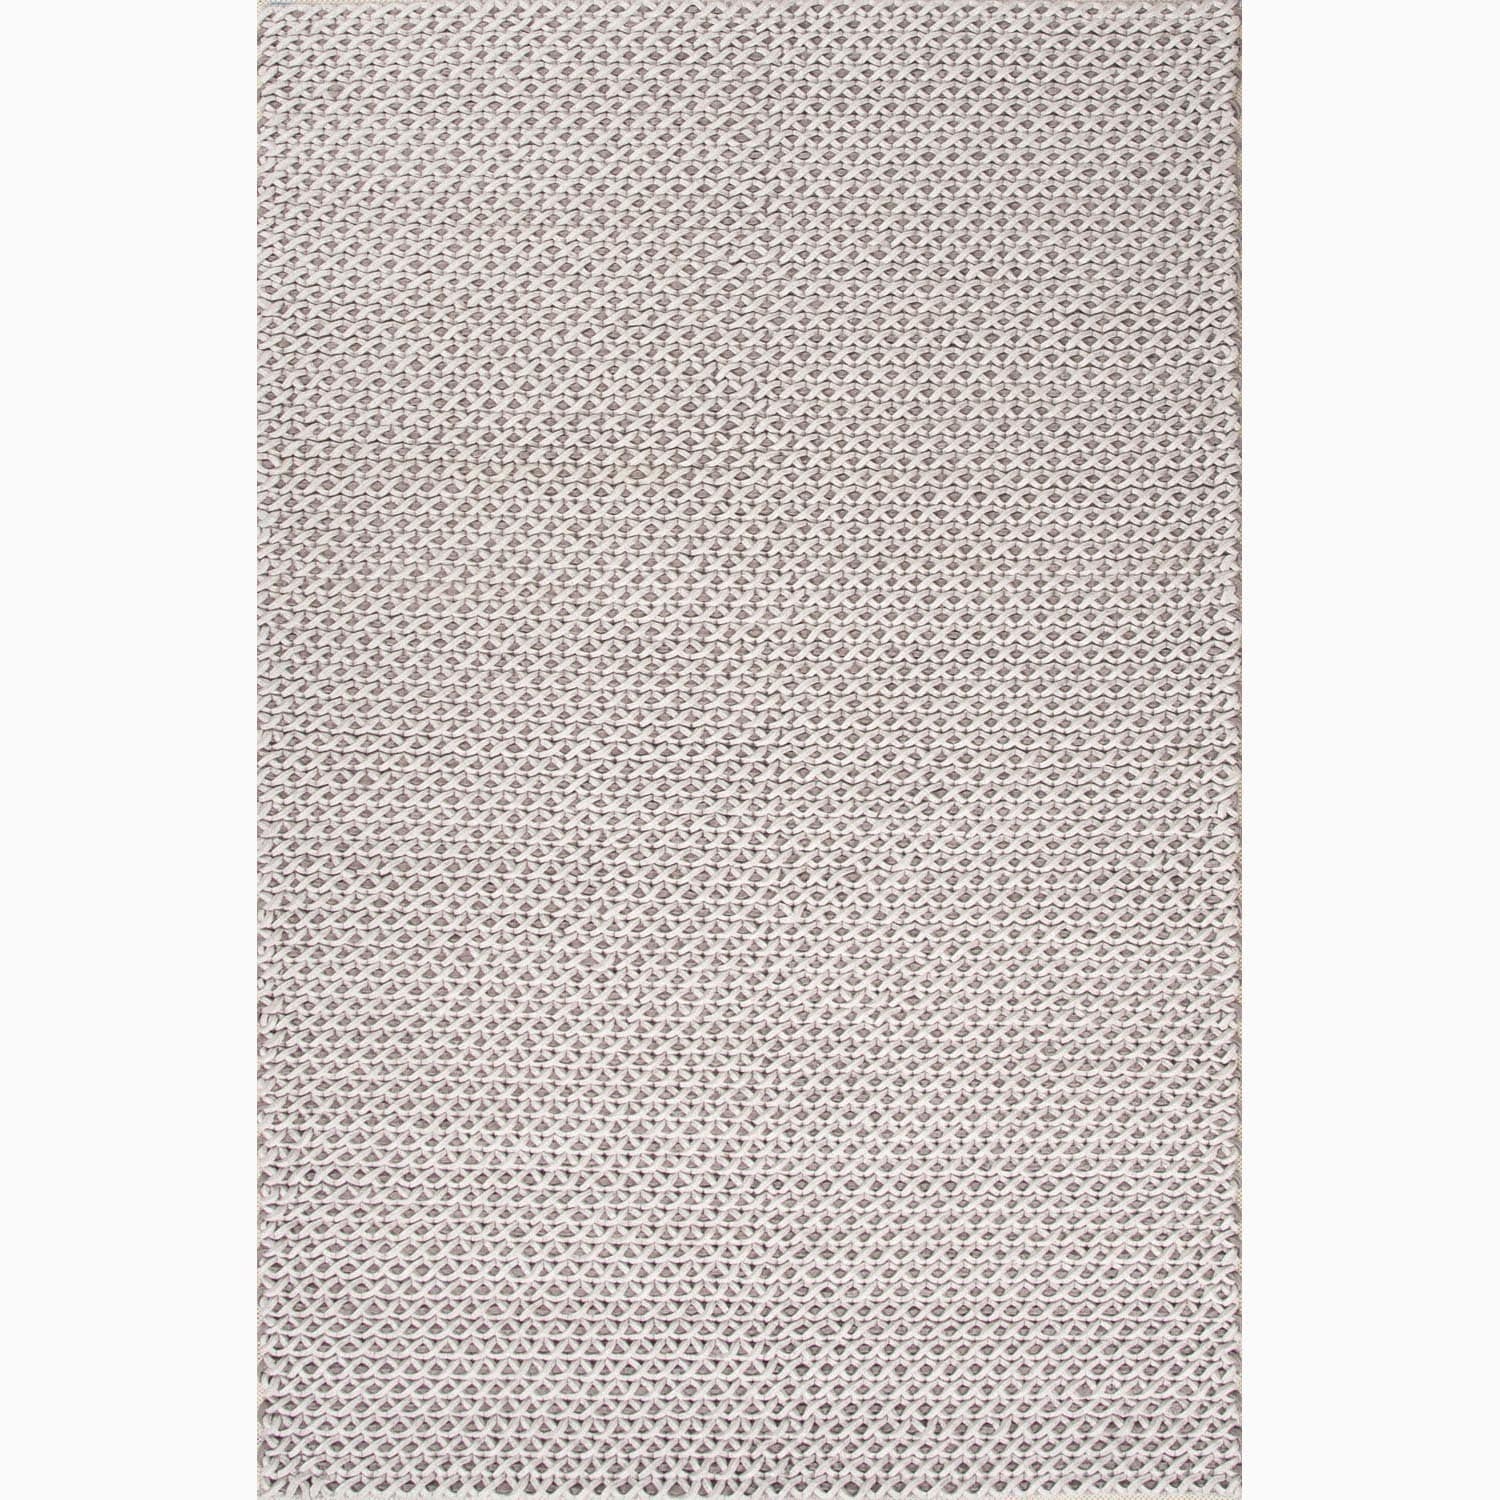 Hand made Gray Wool Ultra Plush Rug (2x3)